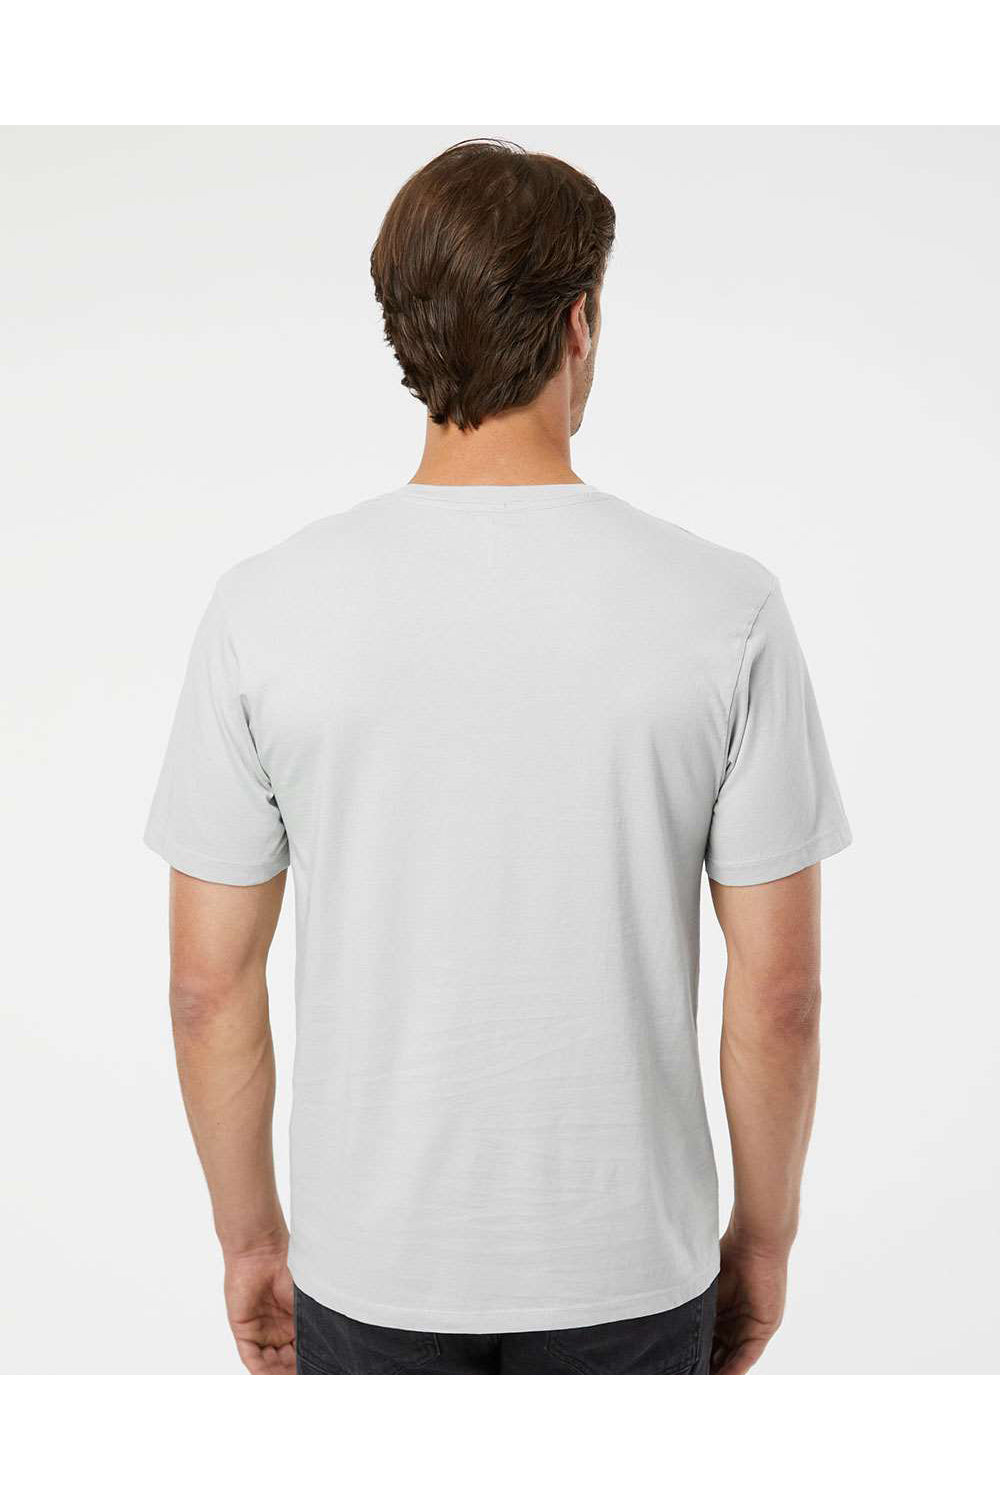 SoftShirts 400 Mens Organic Short Sleeve Crewneck T-Shirt Silver Grey Model Back